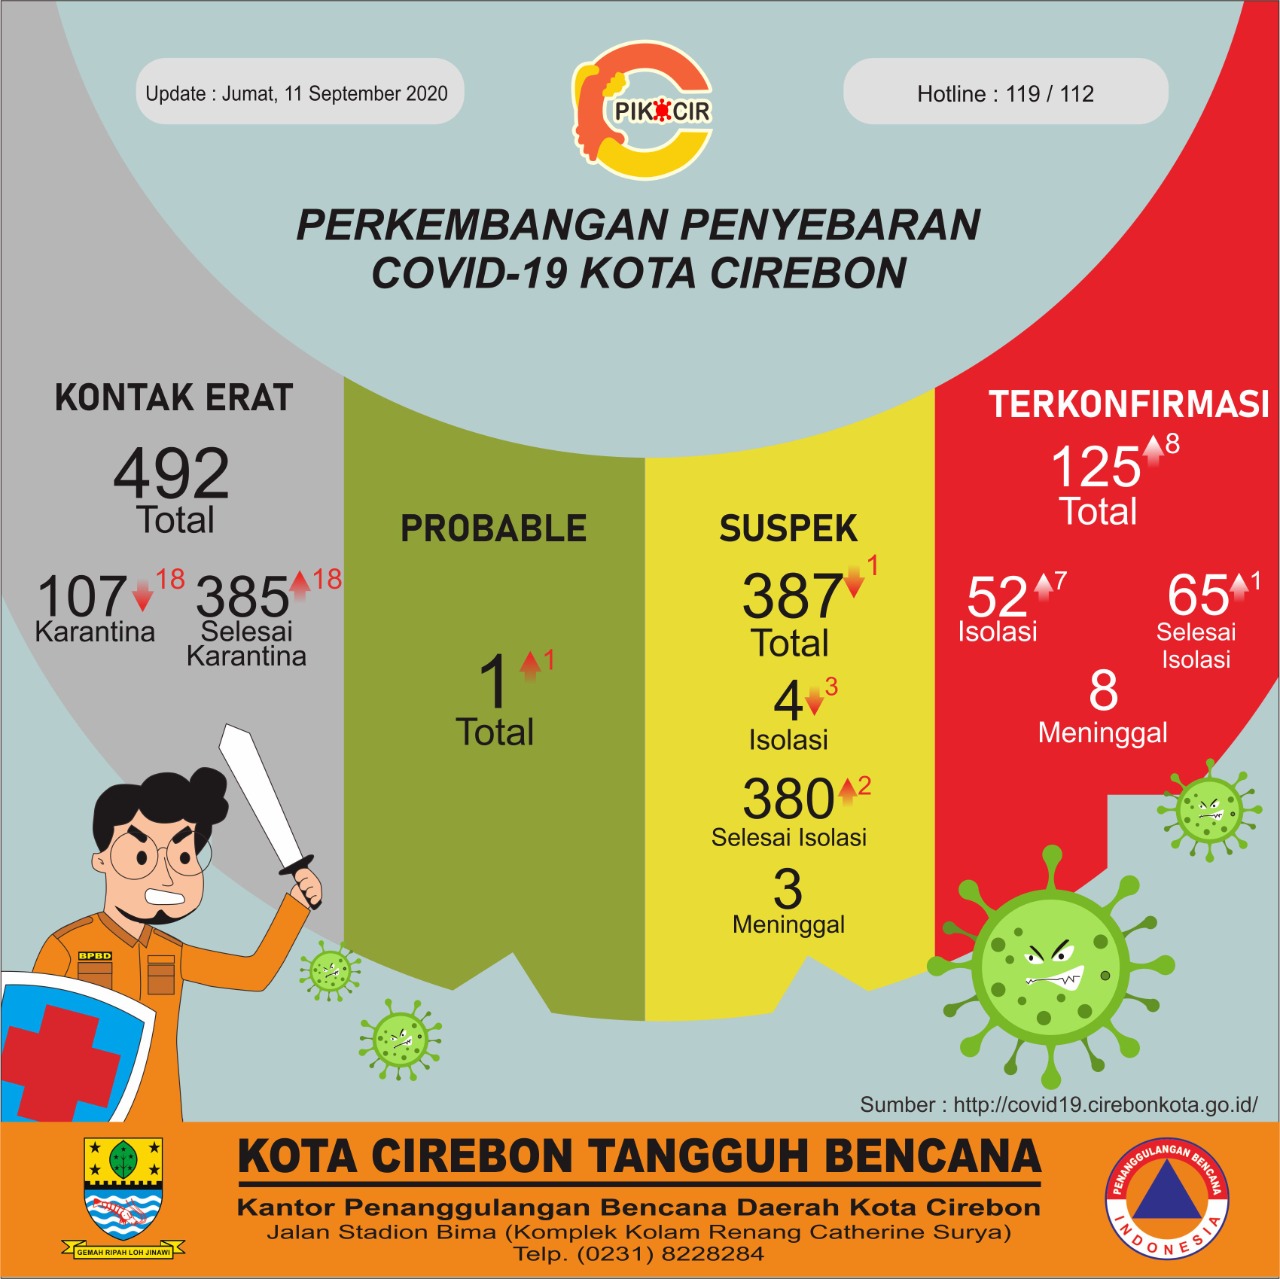 Kota Cirebon Tambah 8 Kasus Covid-19, Jagasatru dari Zona Merah Jadi Biru